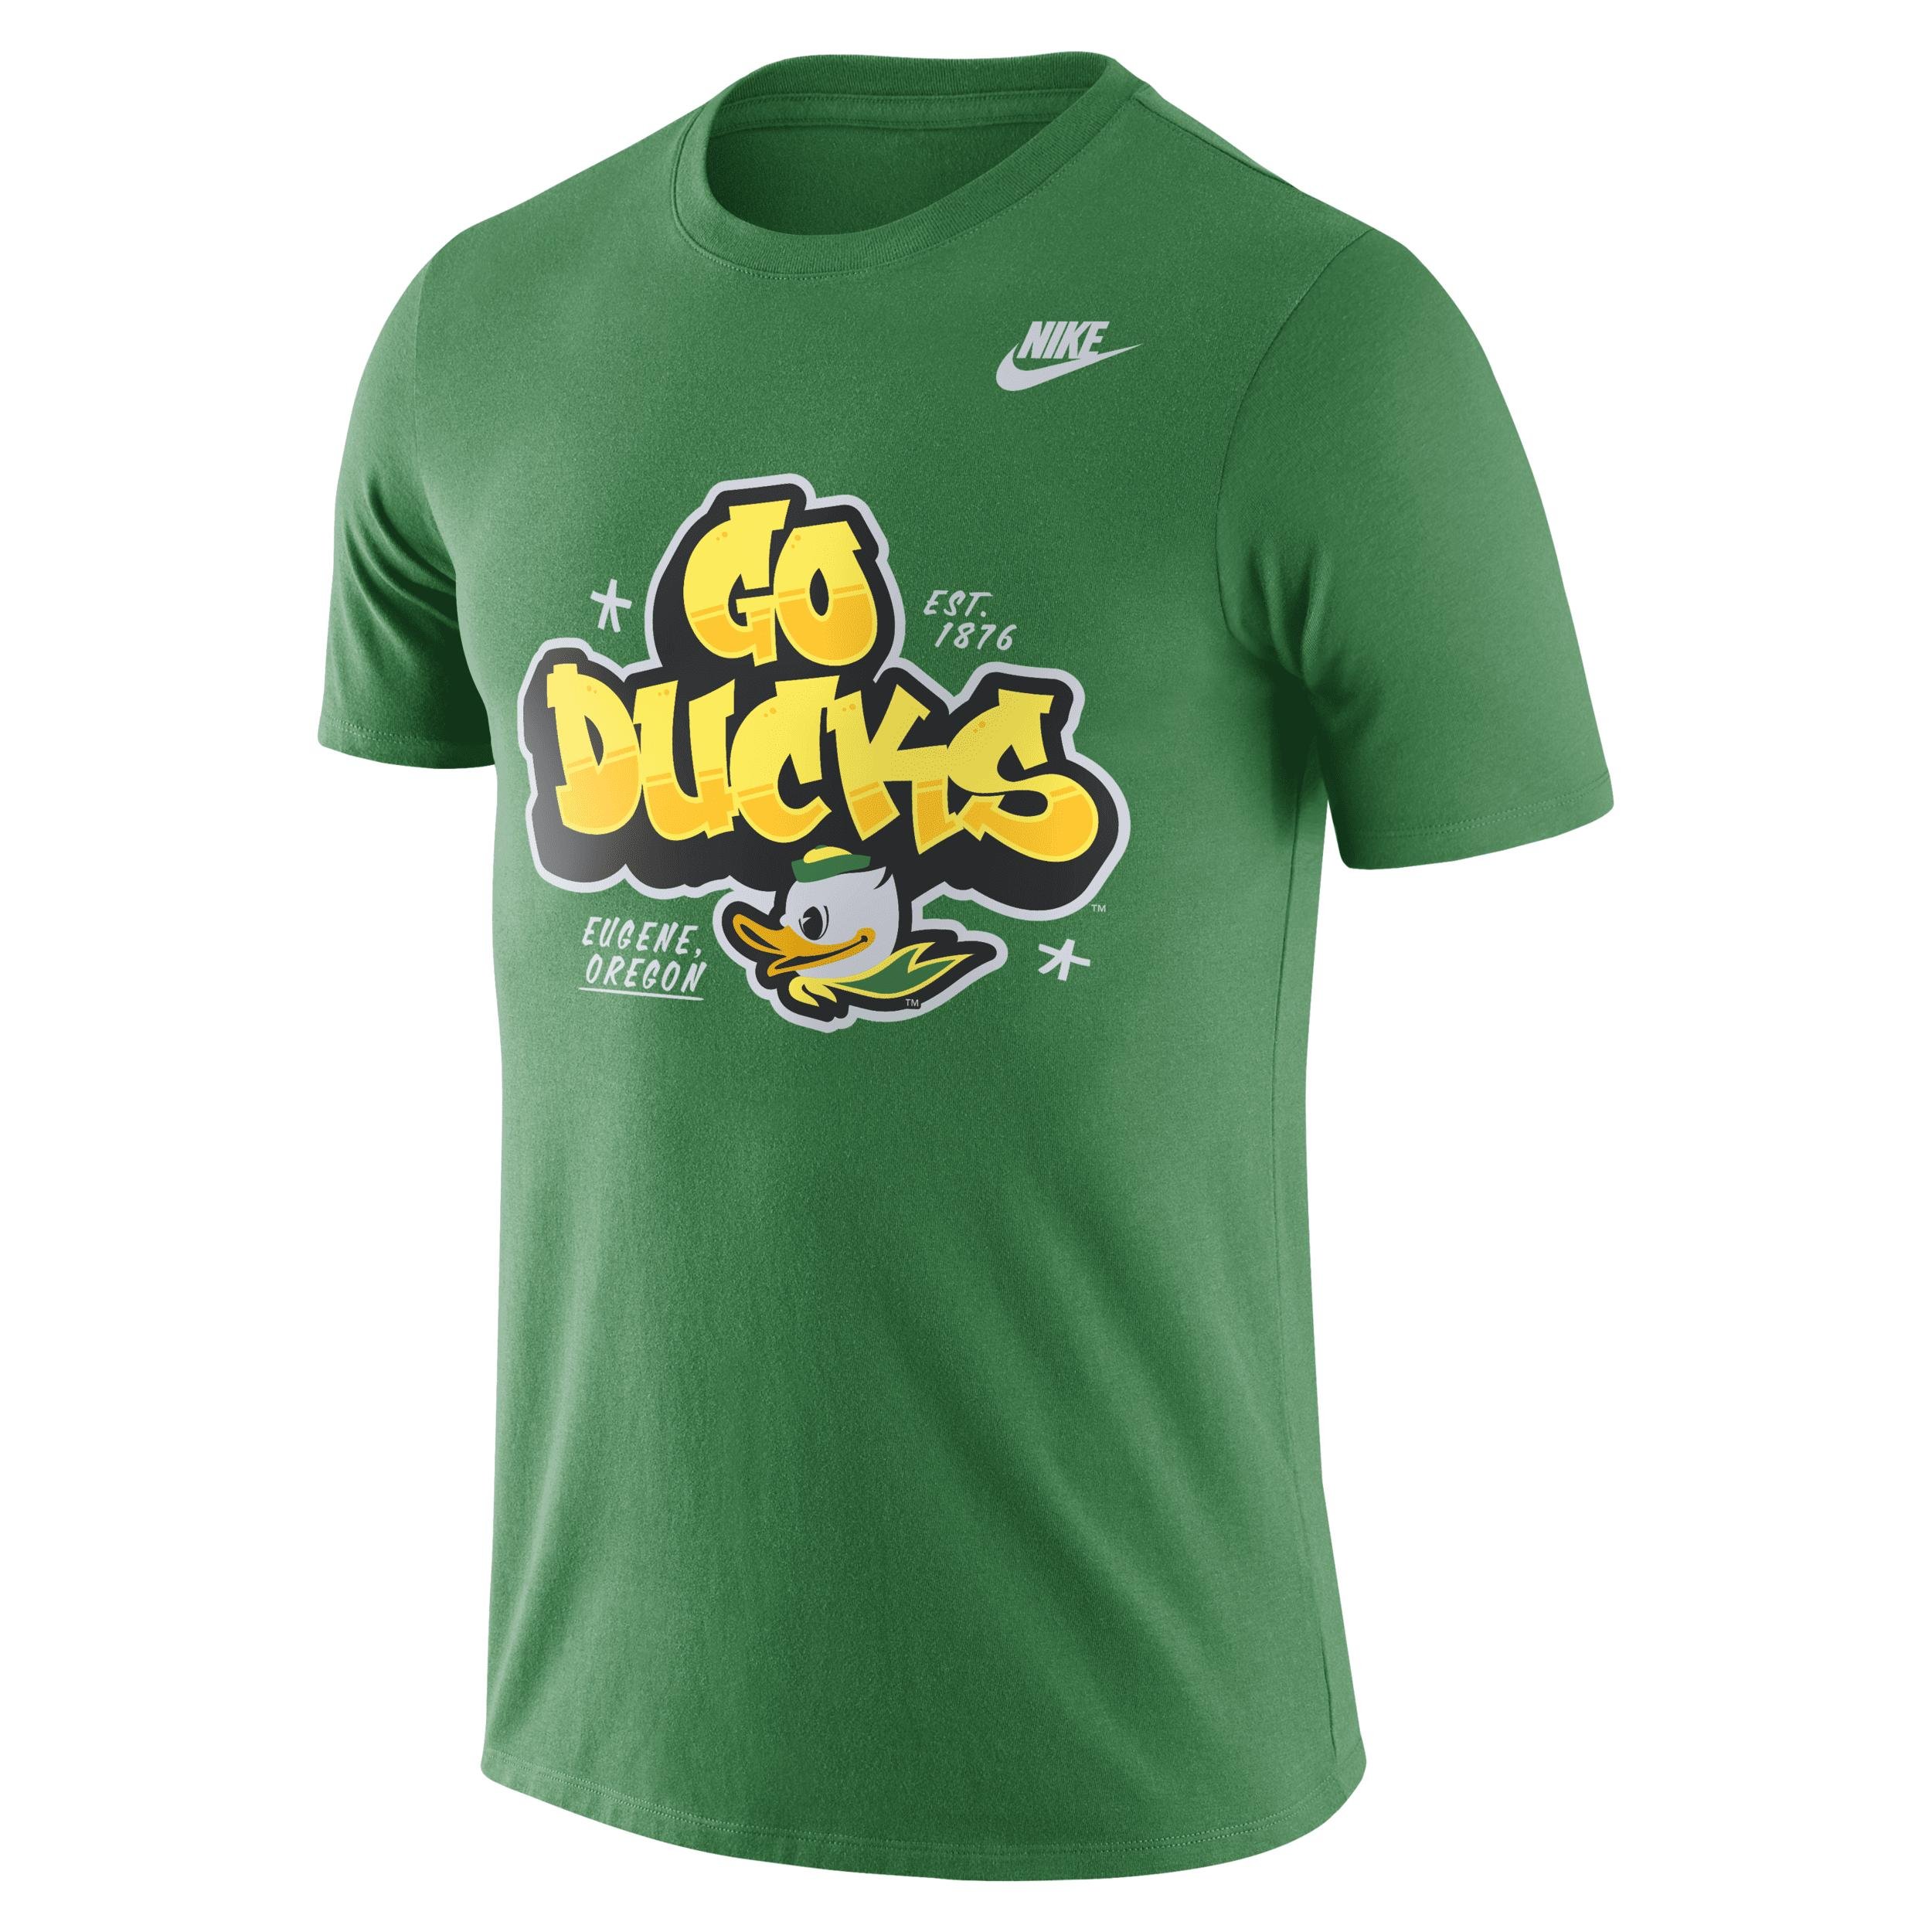 Oregon Nike Men's College T-Shirt by NIKE